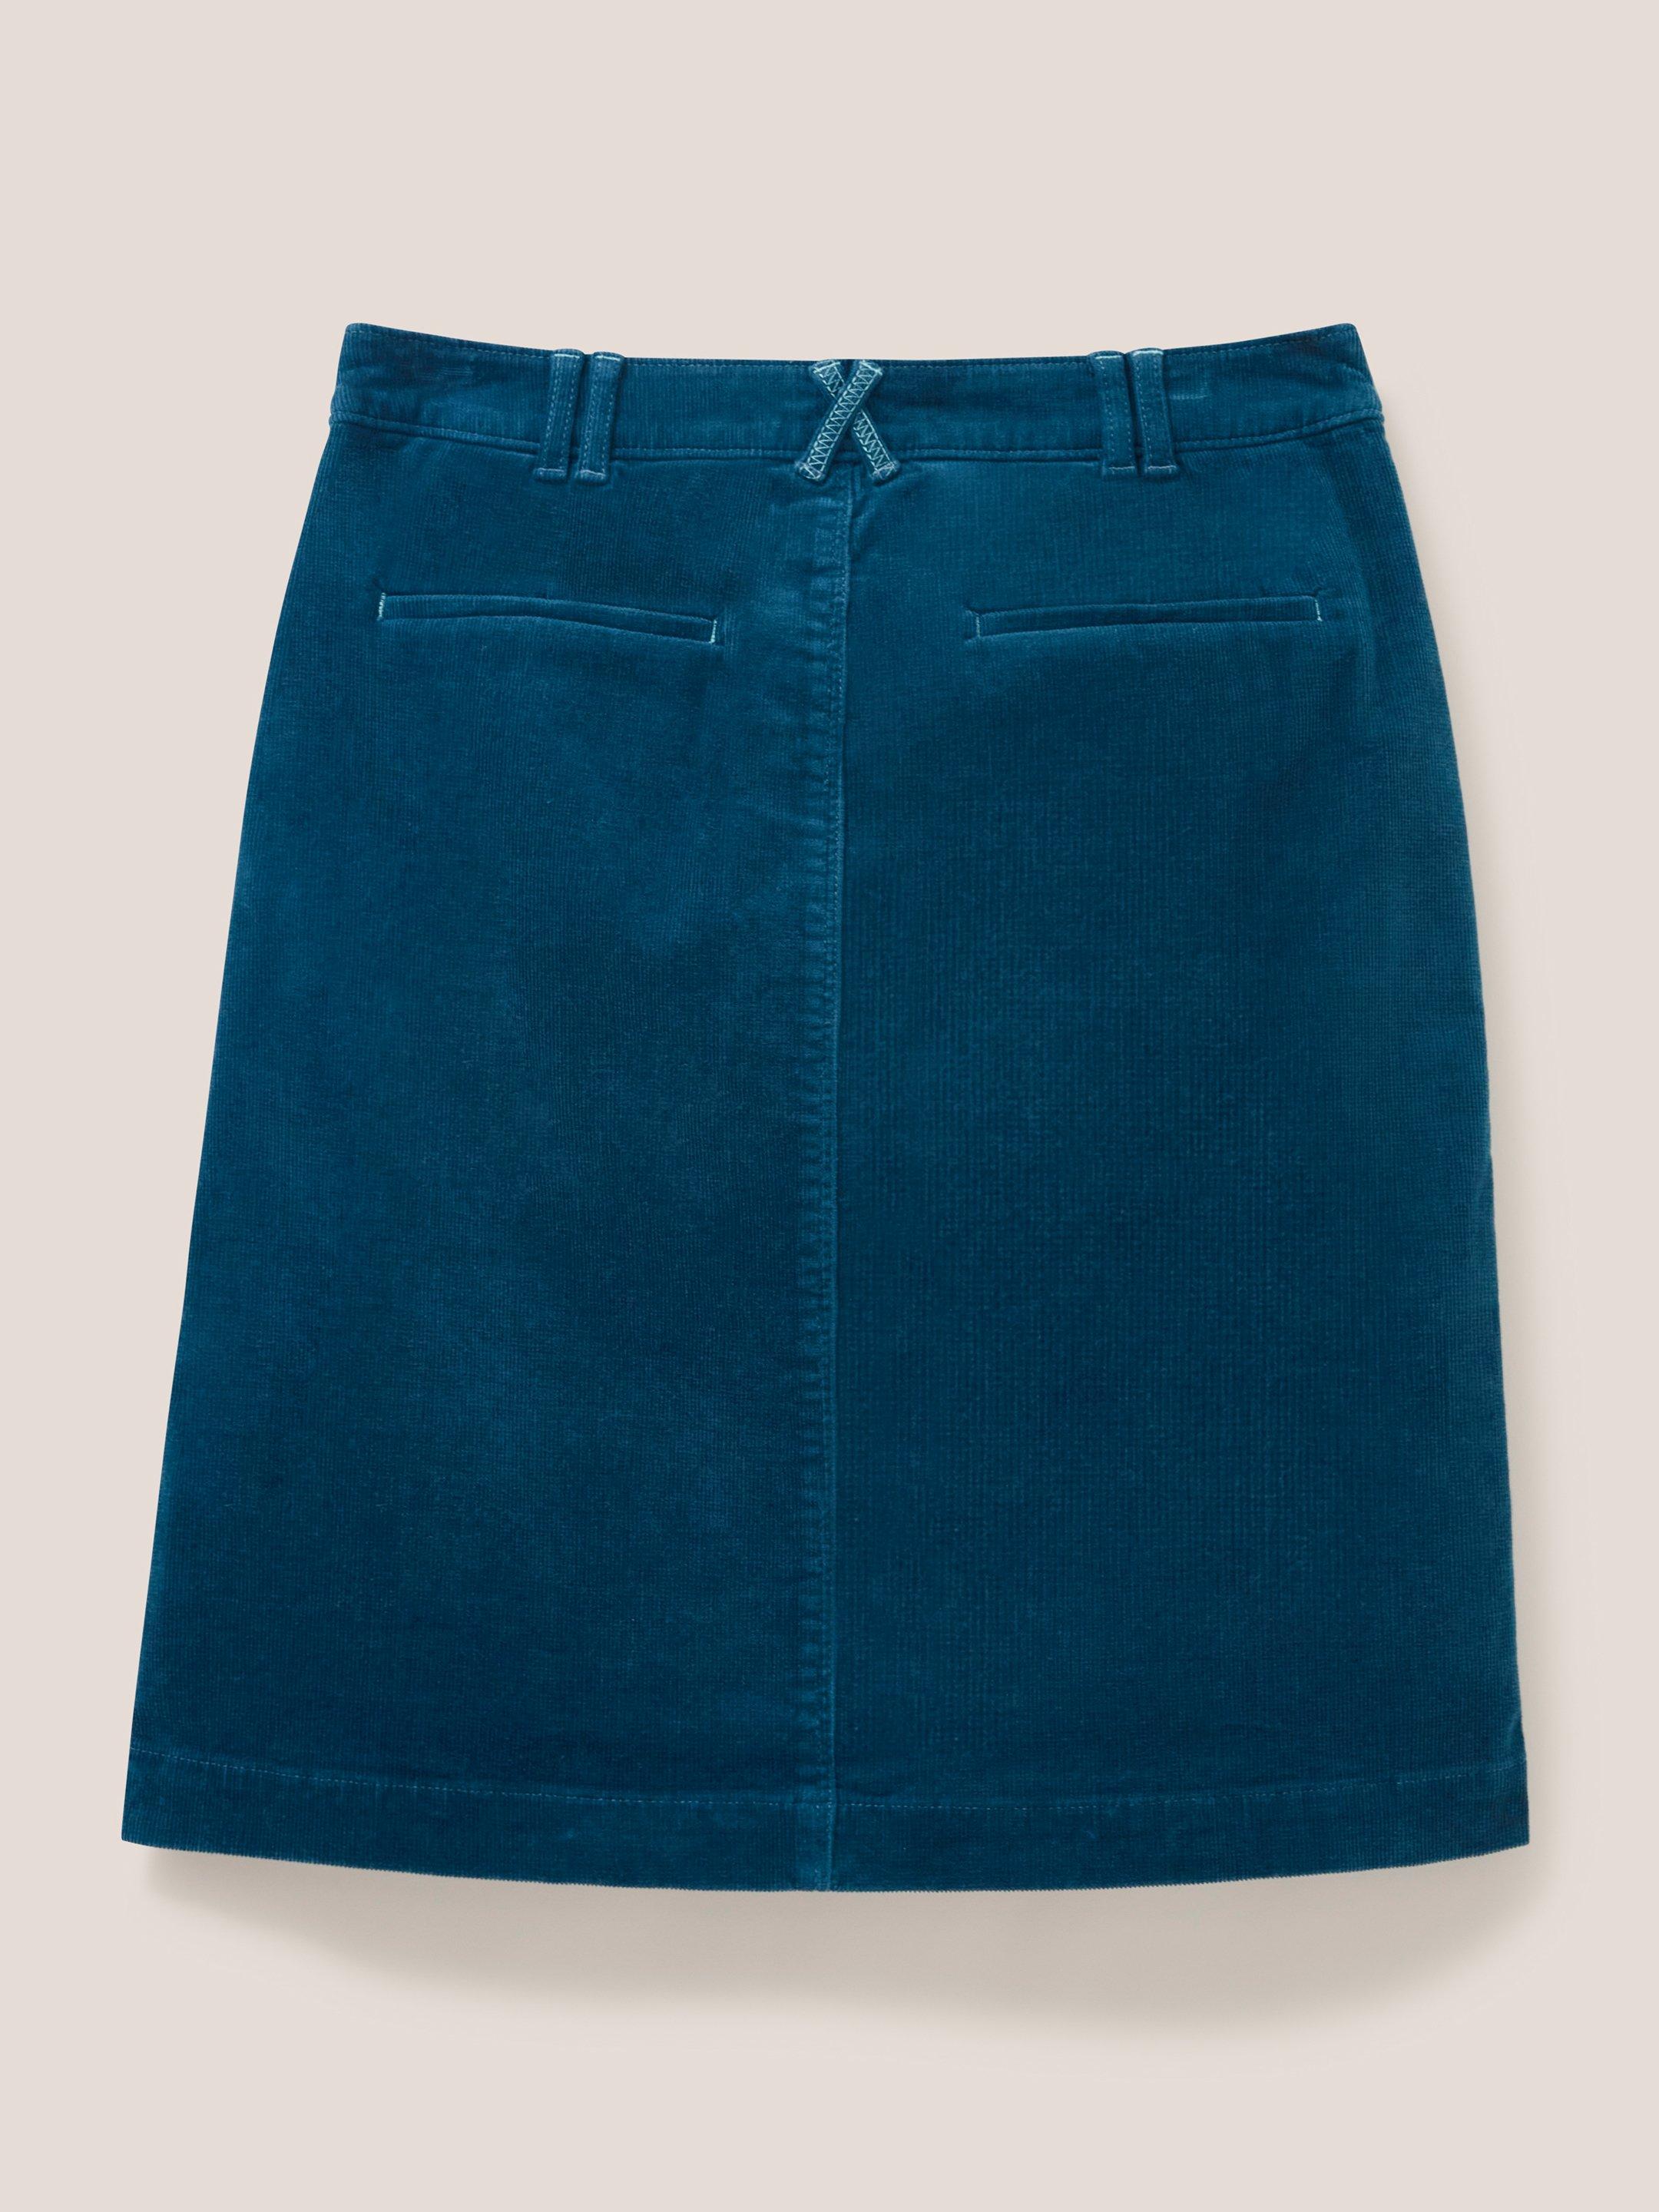 Melody Organic Cord Skirt in DK TEAL - FLAT BACK